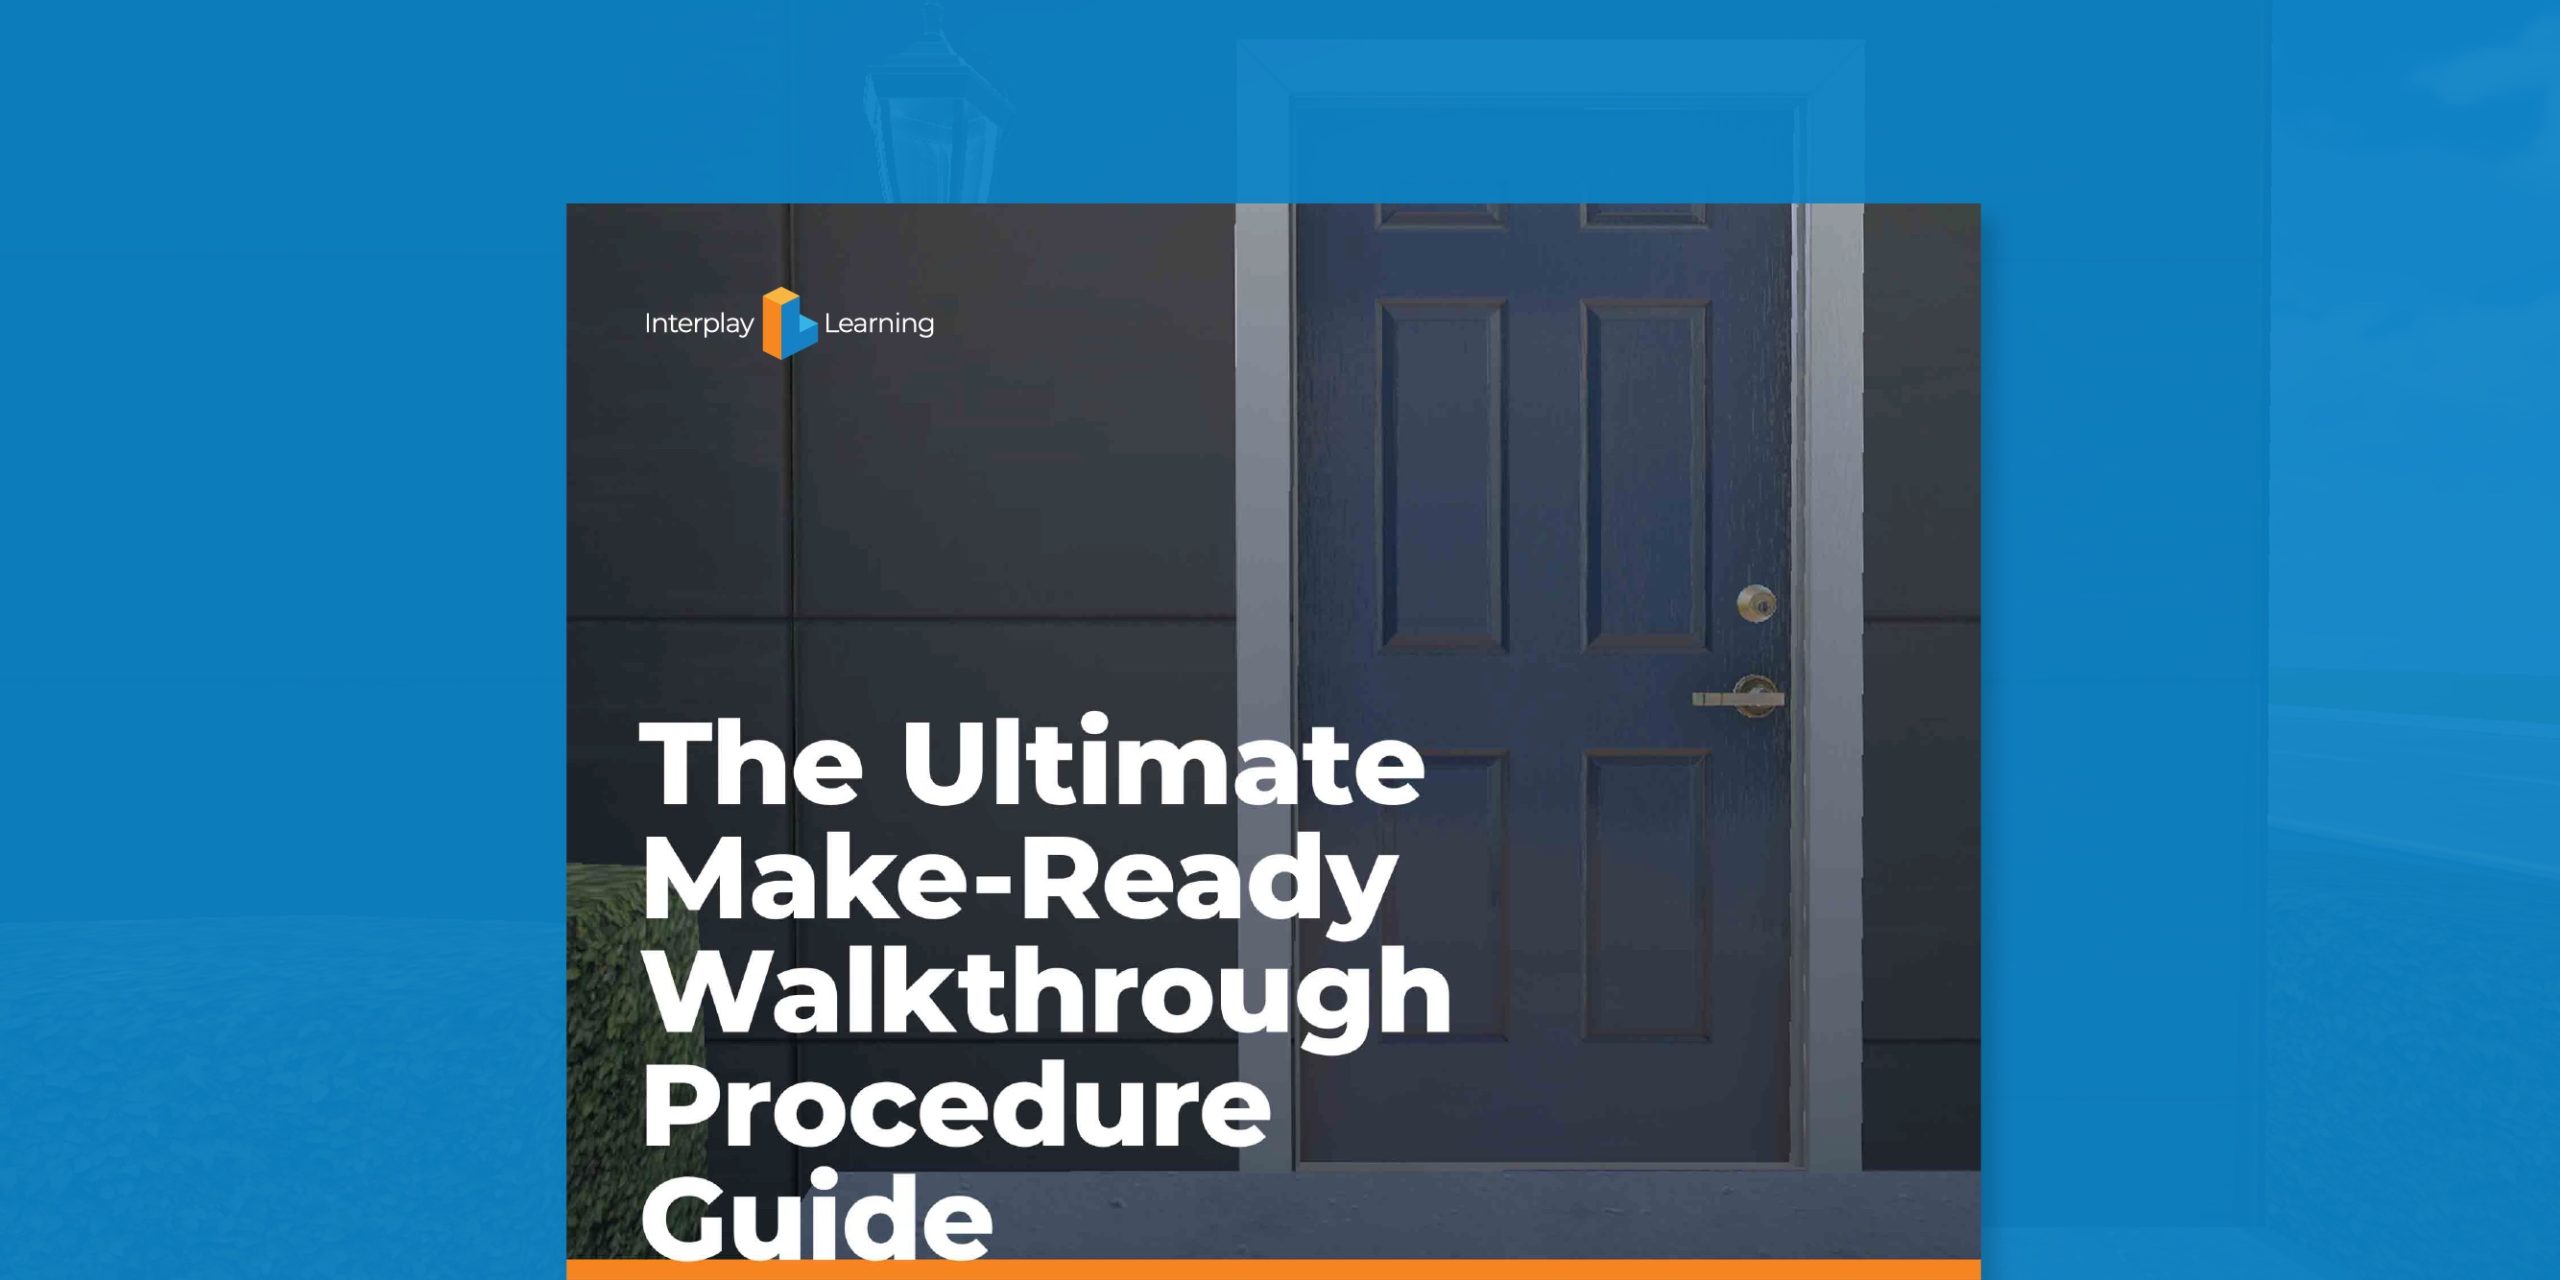 The Ultimate Make-Ready Walkthrough Procedure Guide